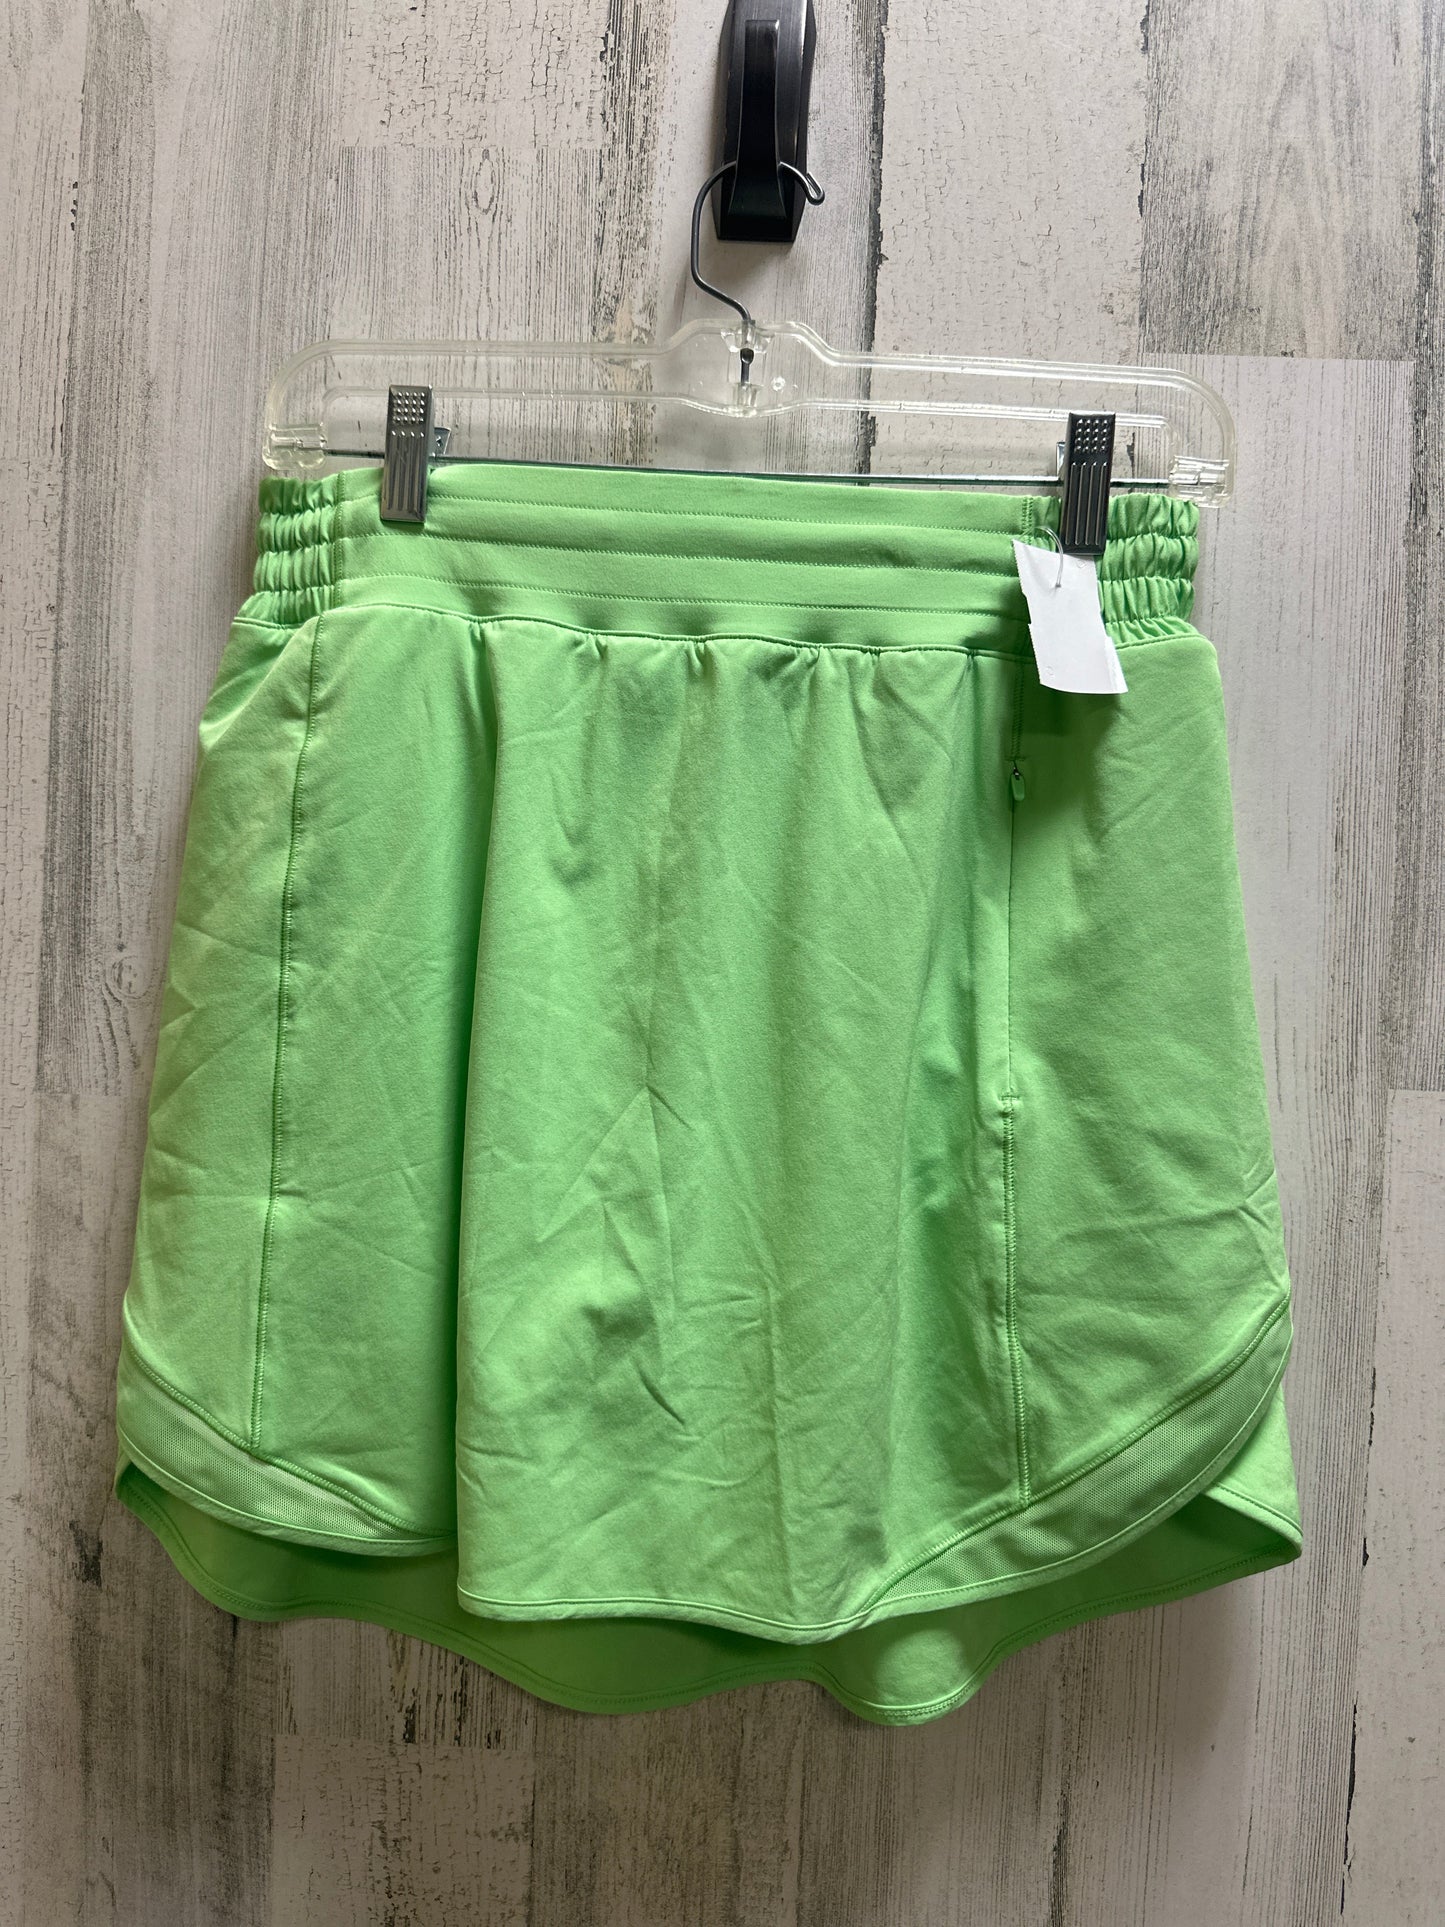 Green Athletic Skort Lululemon, Size 8